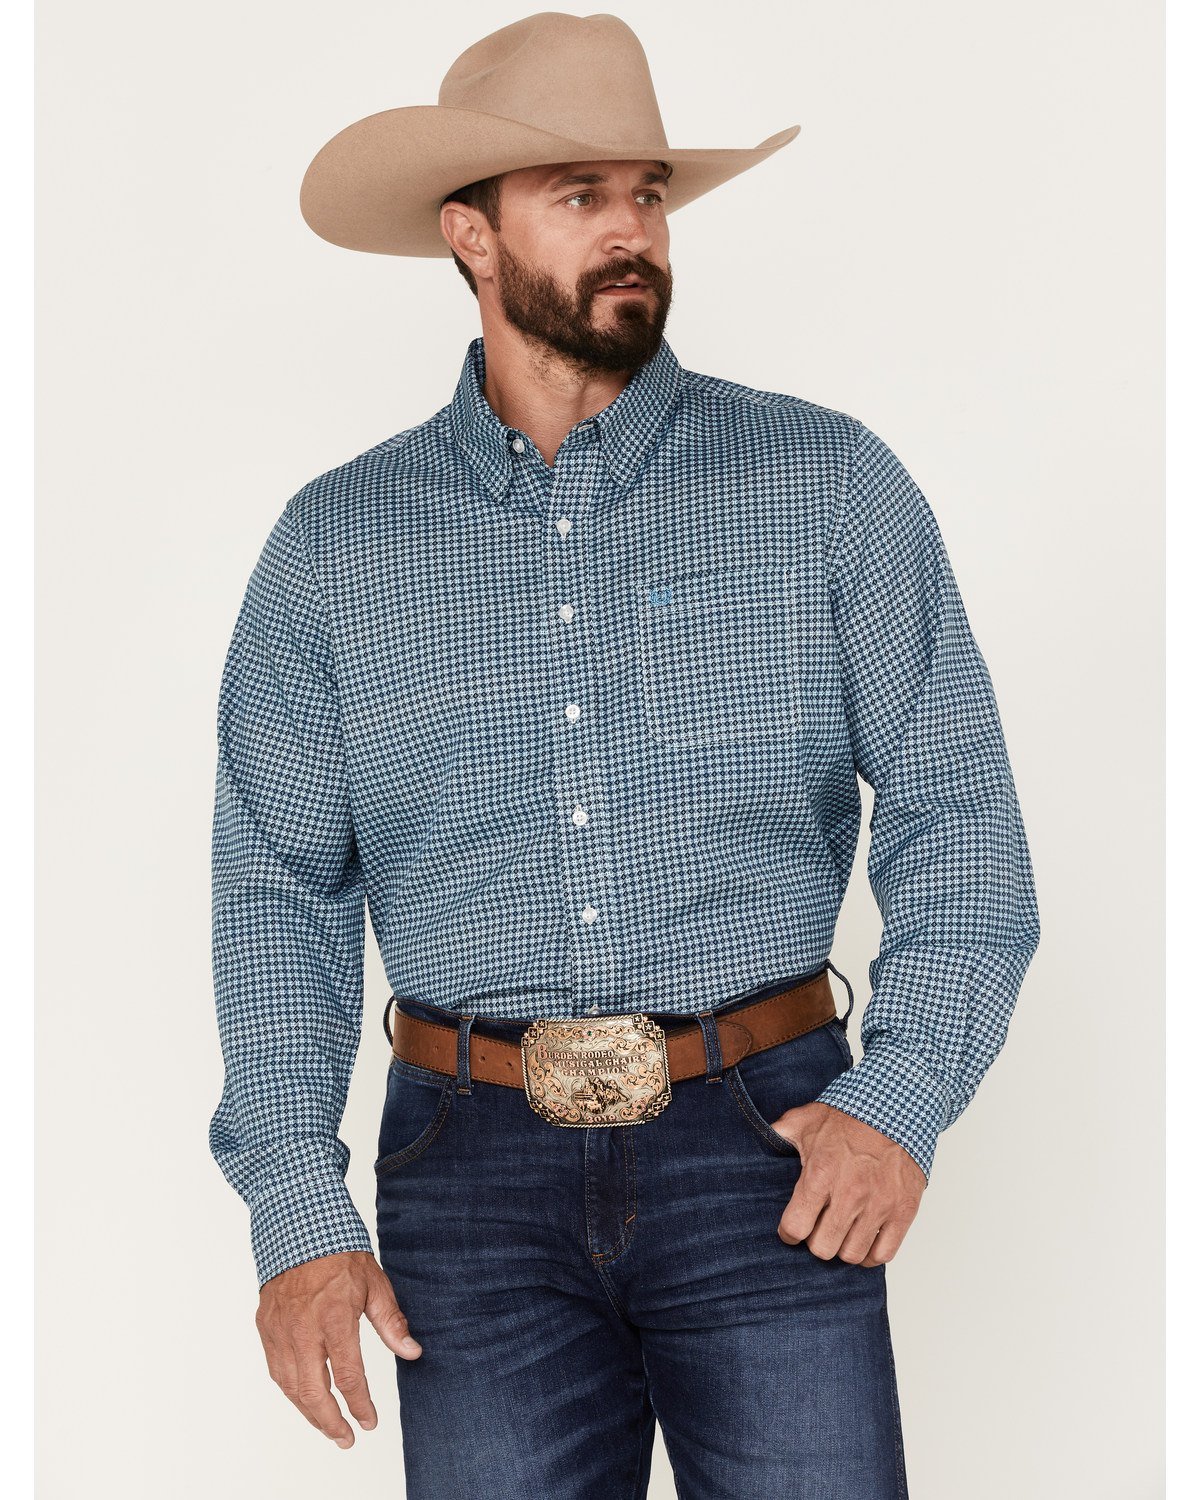 Panhandle Men's Performance Geo Print Long Sleeve Button Down Shirt